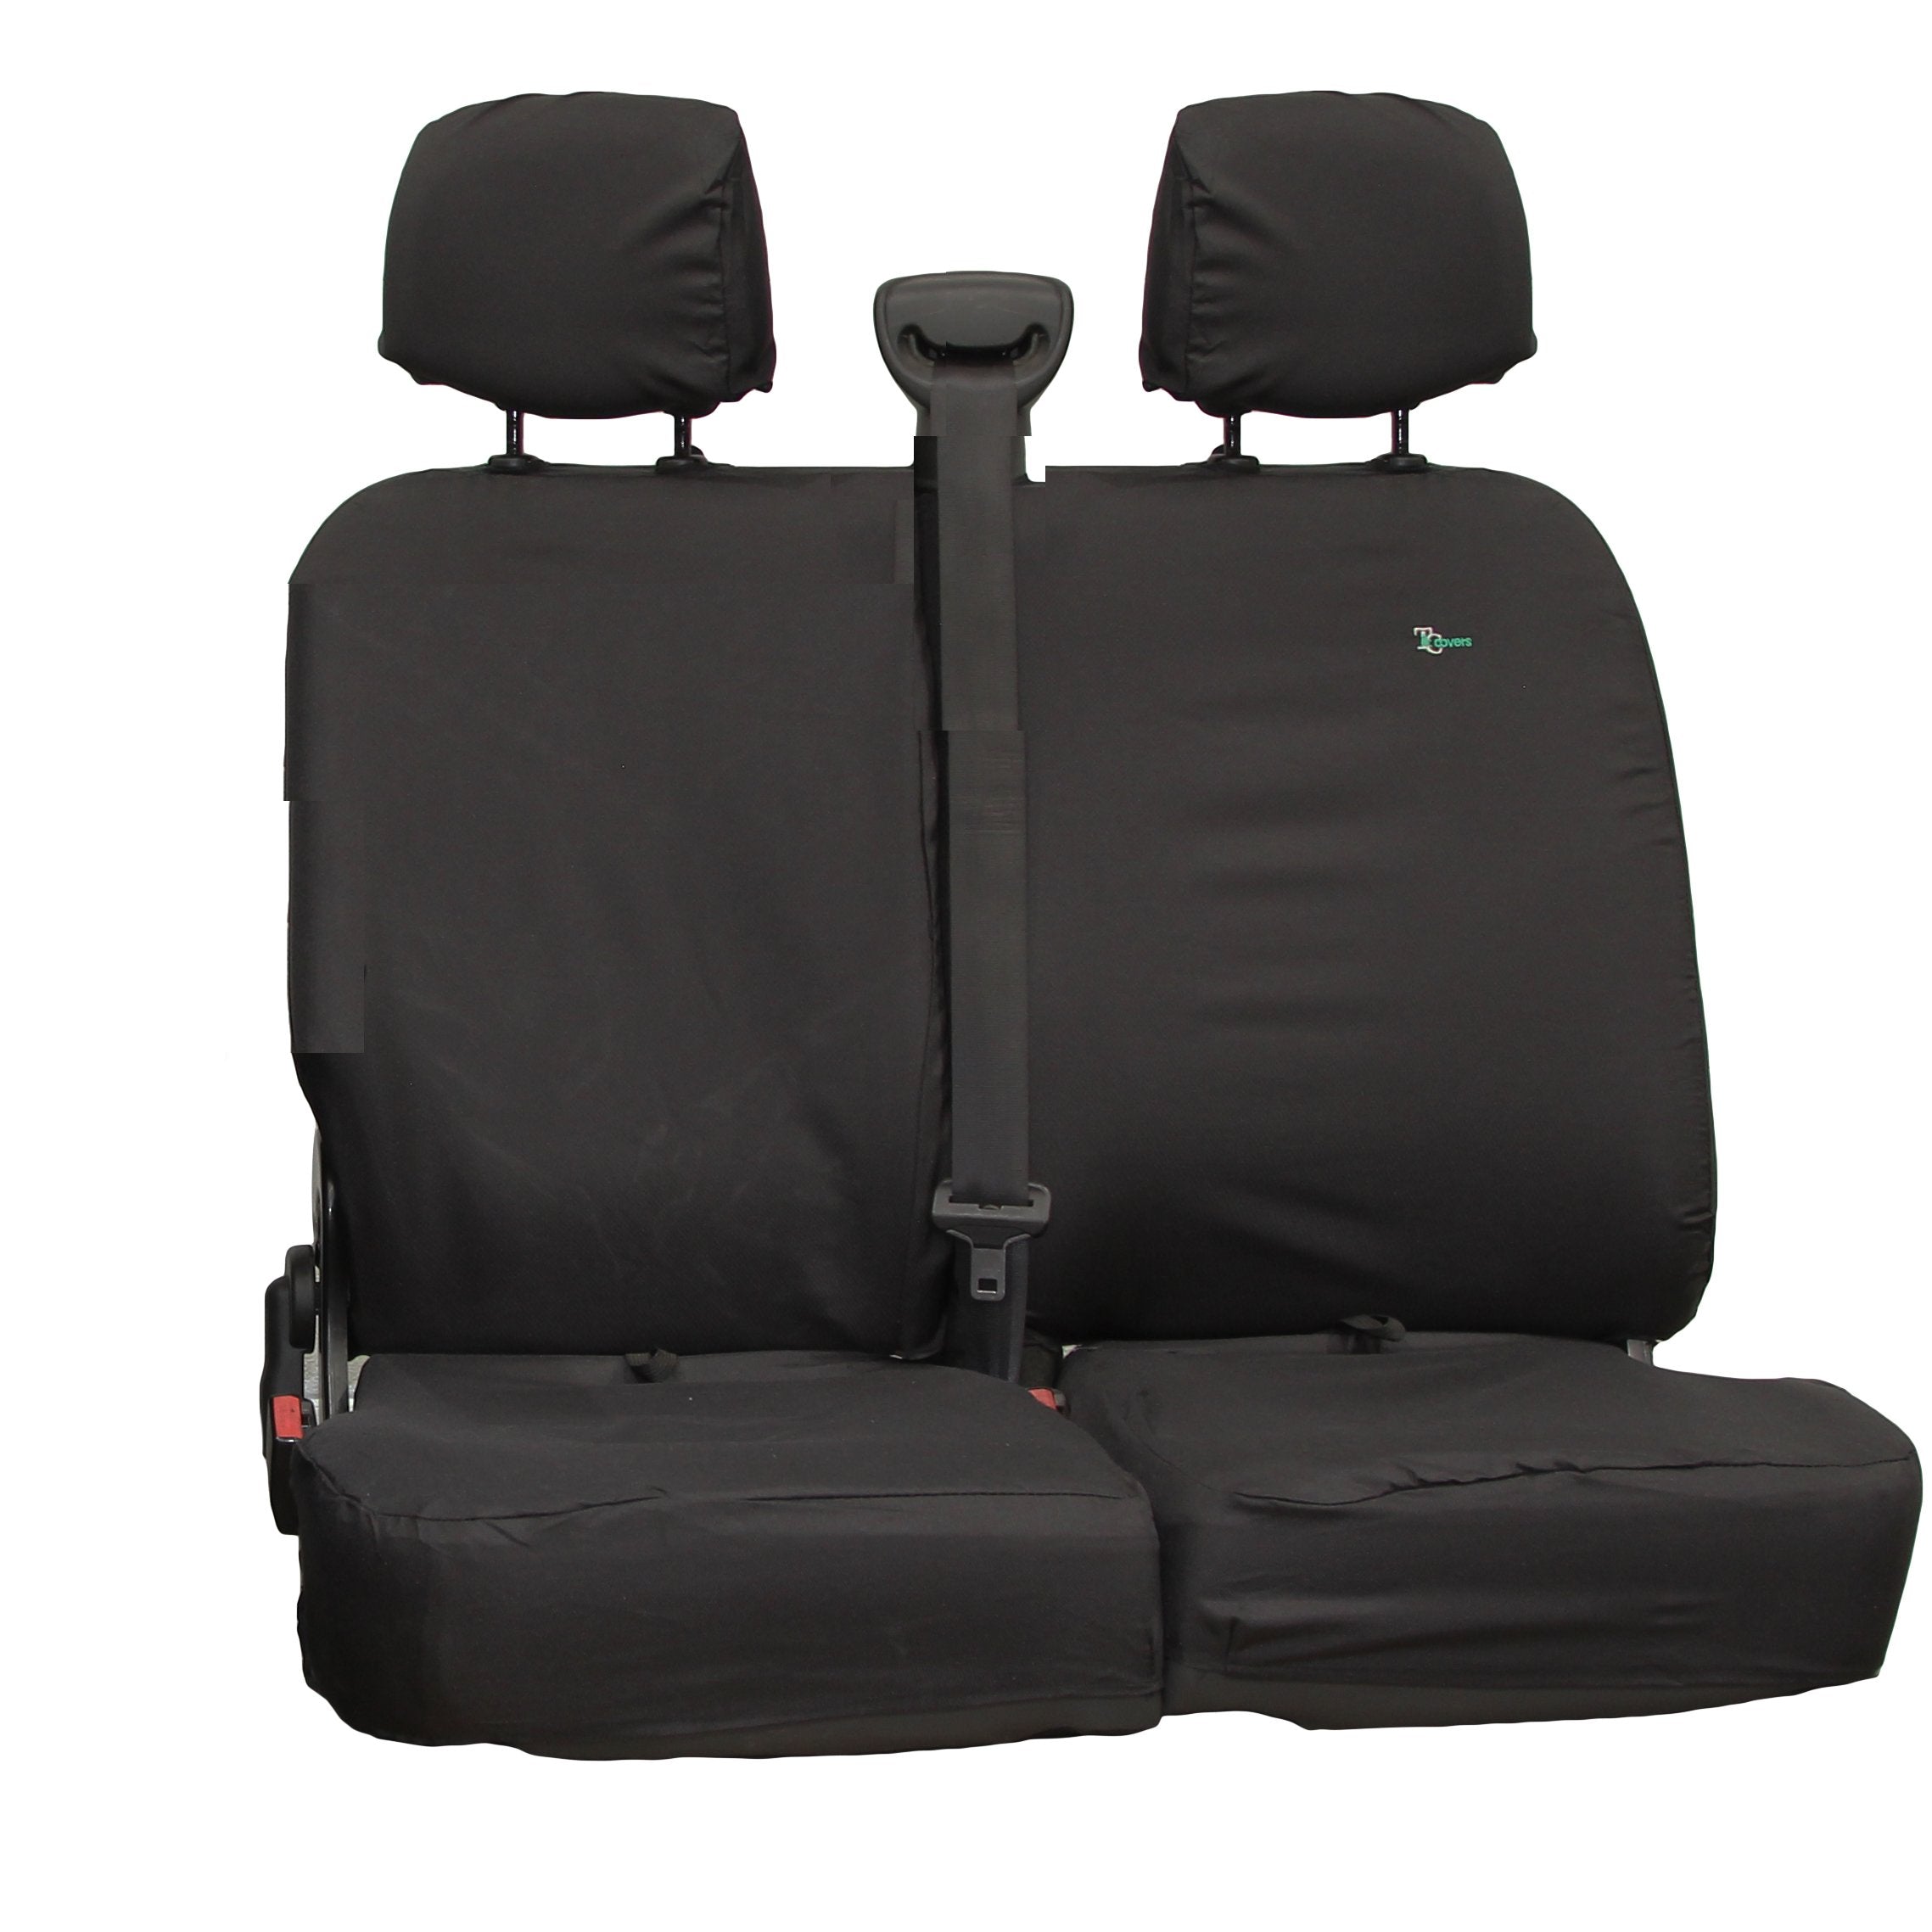 Vauxhall Vivaro Combi Seat Covers (2014 Onwards)